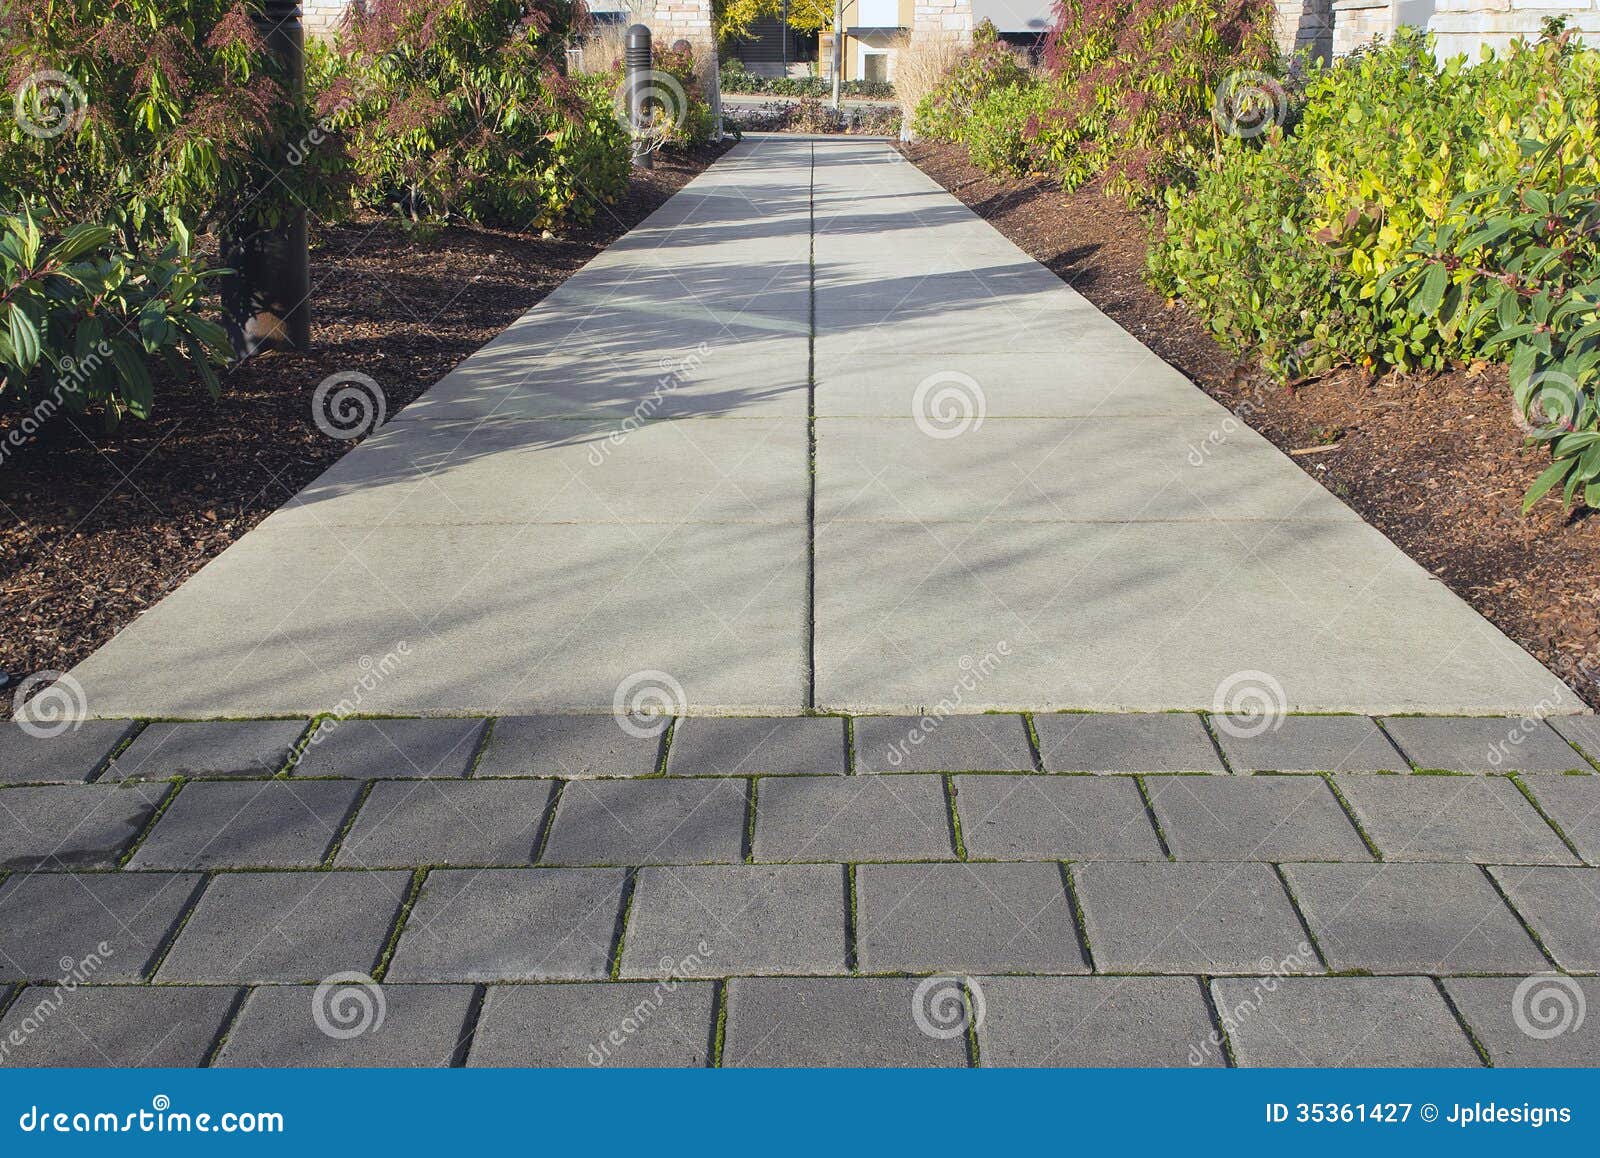 commercial outdoor sidewalk landscaping